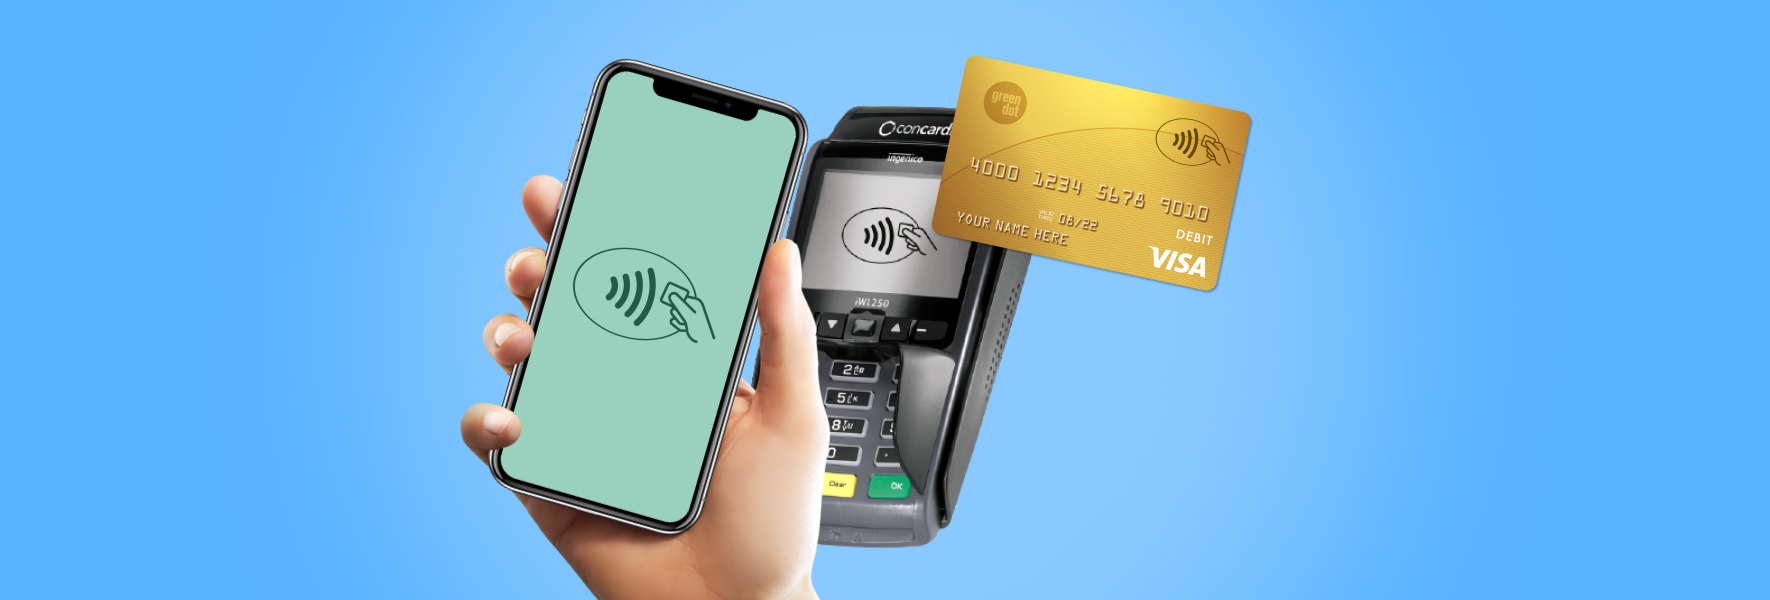 NFC - Бесконтакнтая оплата с телефона